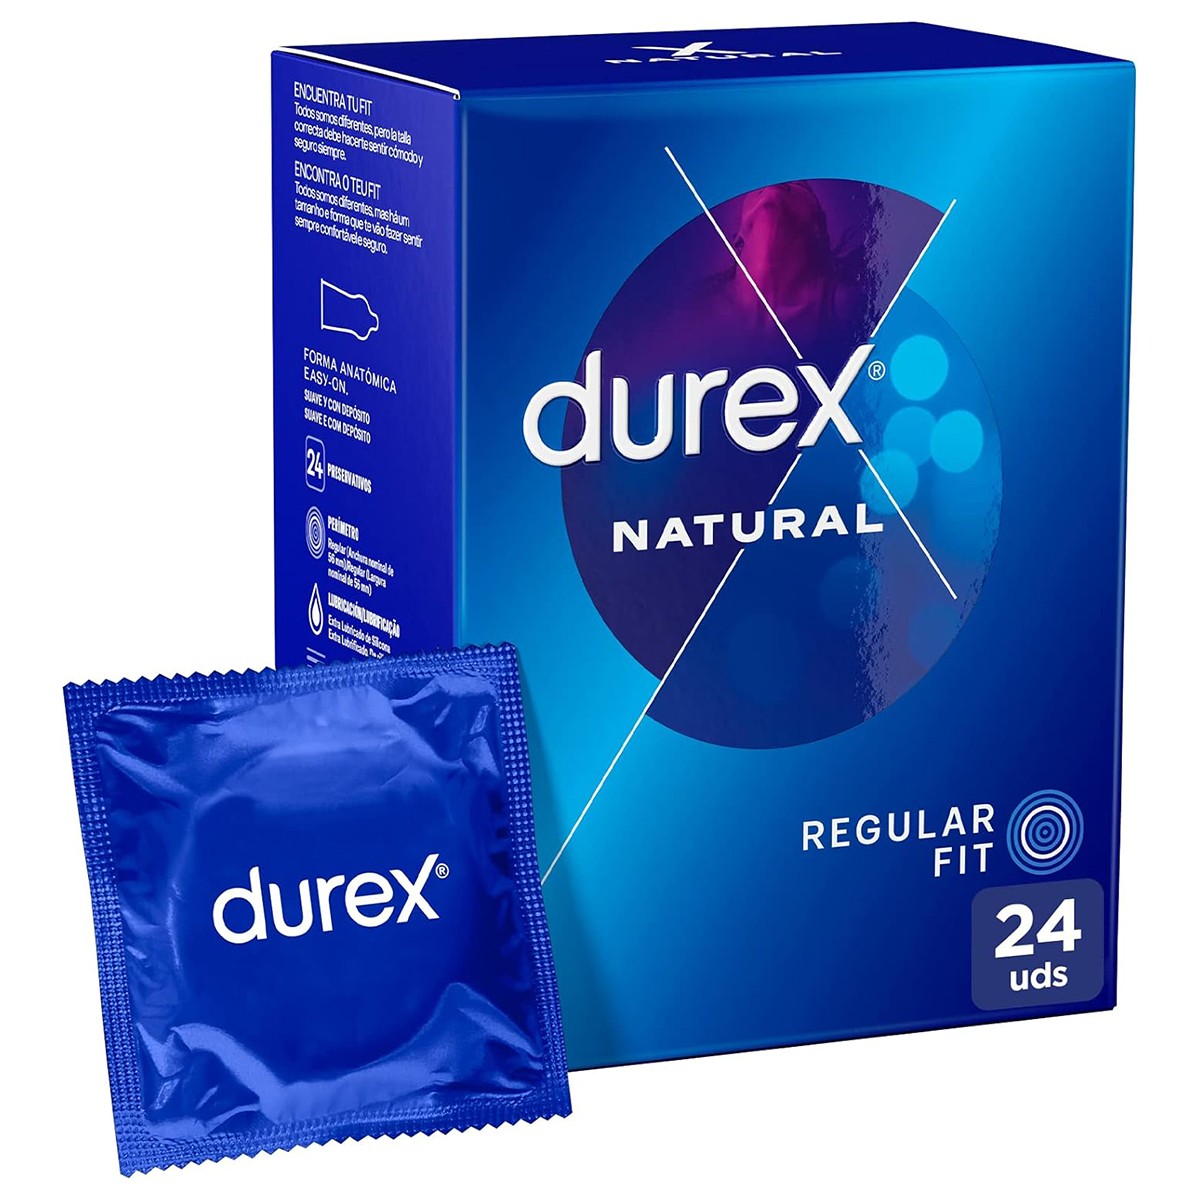 Durex preservativo natural plus easy on 24uds